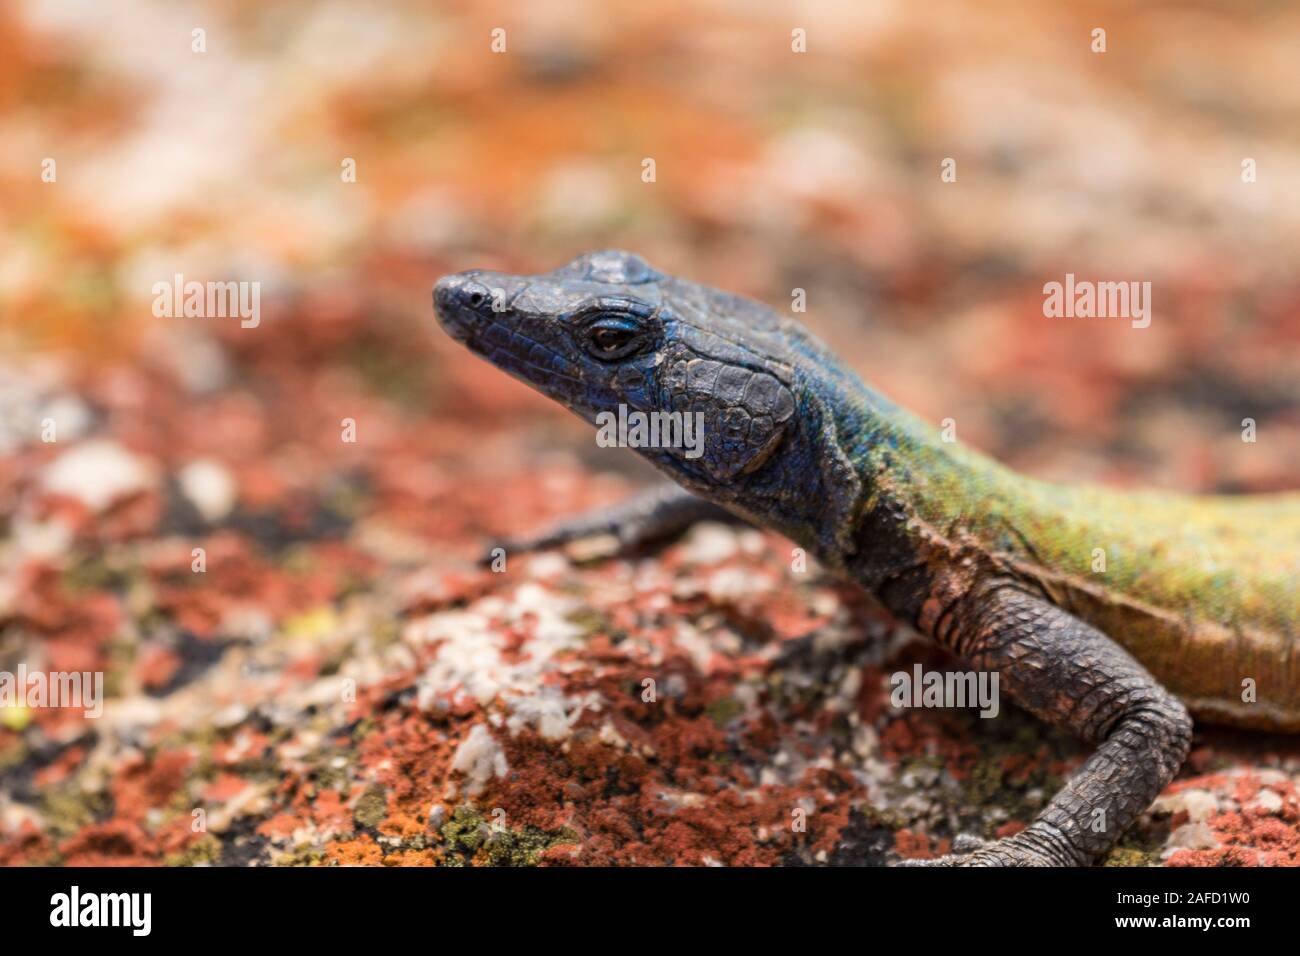 Matobo Hills National Park, Zimbabwe. An Augrabies flat lizard (Broadley's flat lizard) on an algae-covered rock, Stock Photo